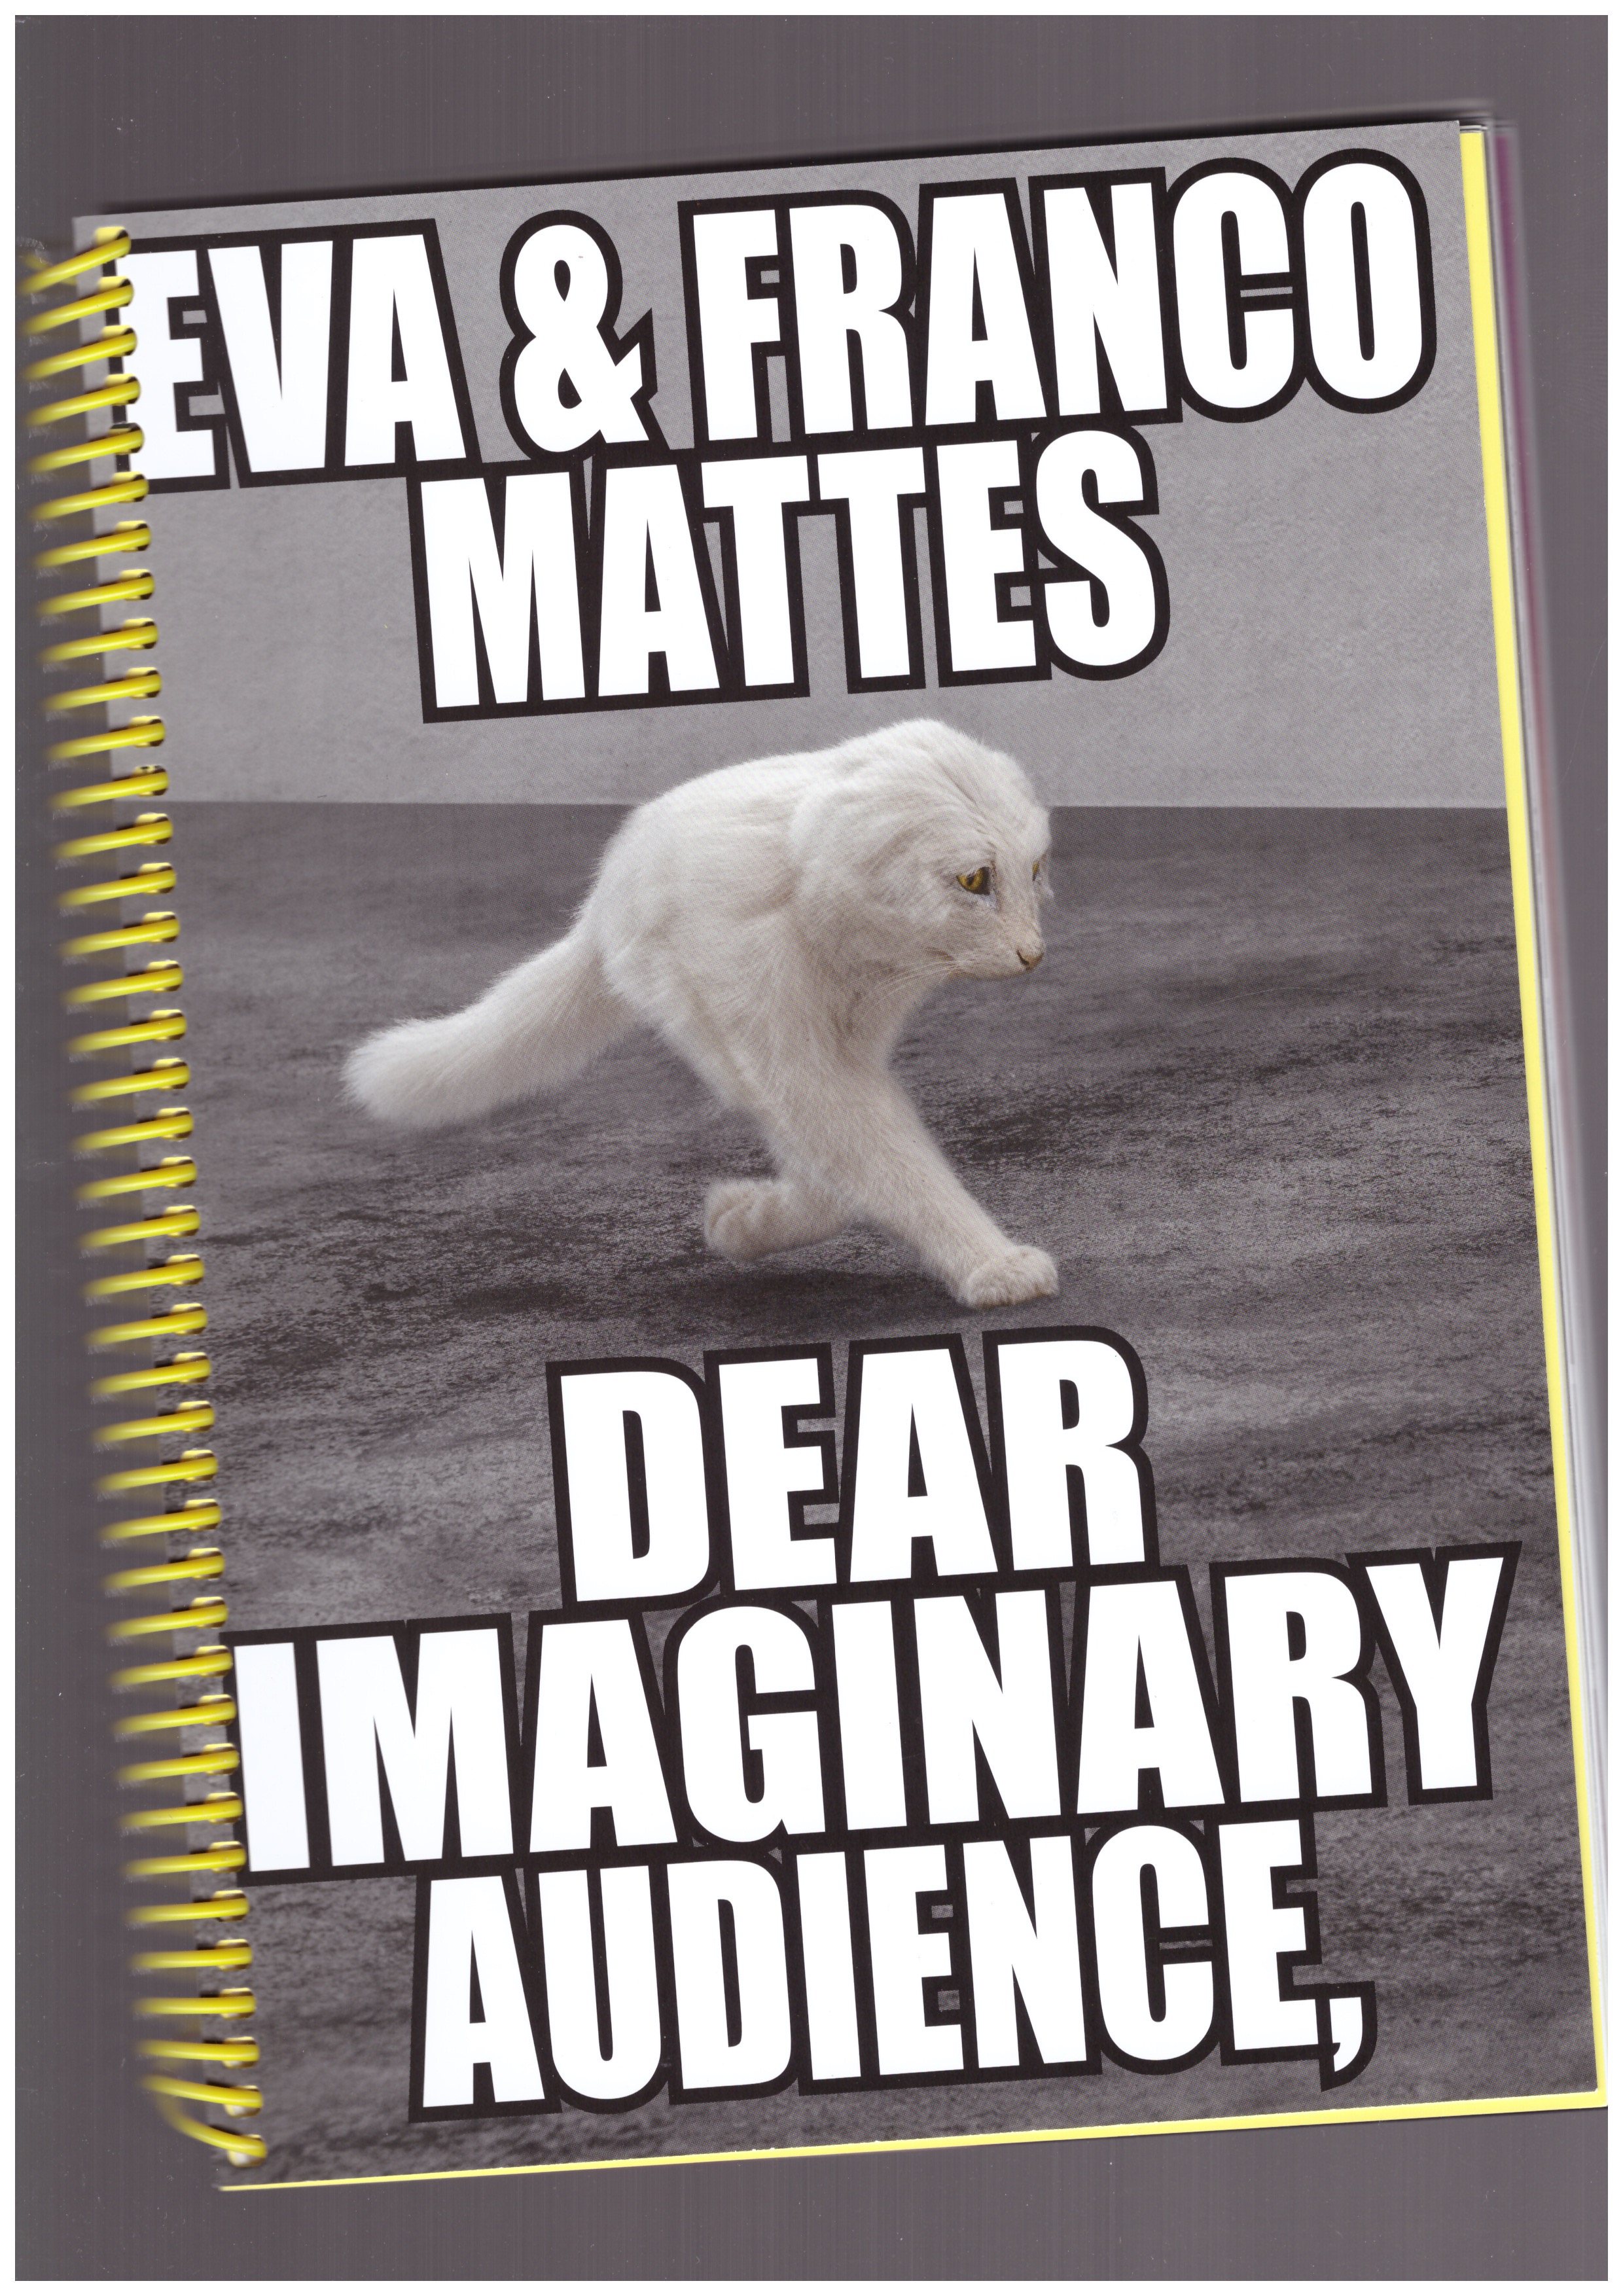 MATTES, Eva & Franco - Dear Imaginary Audience